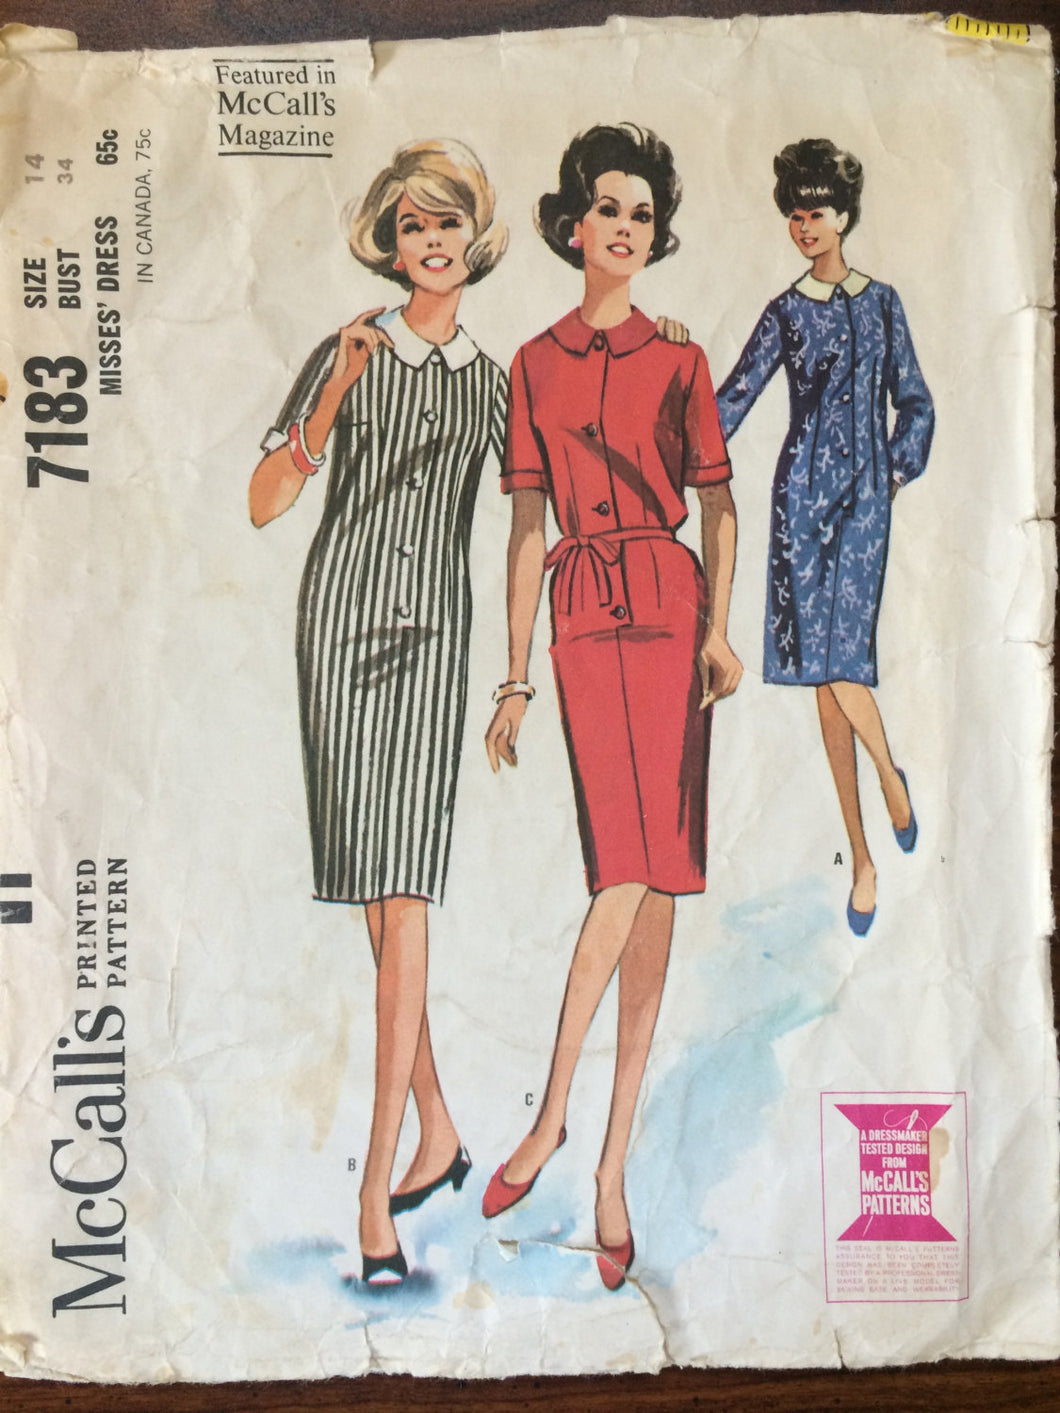 1960's Dress Pattern / Vintage Sewing Pattern / McCall's 7183 / Size 14 Bust 34 / Simple Dress Pattern / Sheath Dress Pattern / Shirt Dress